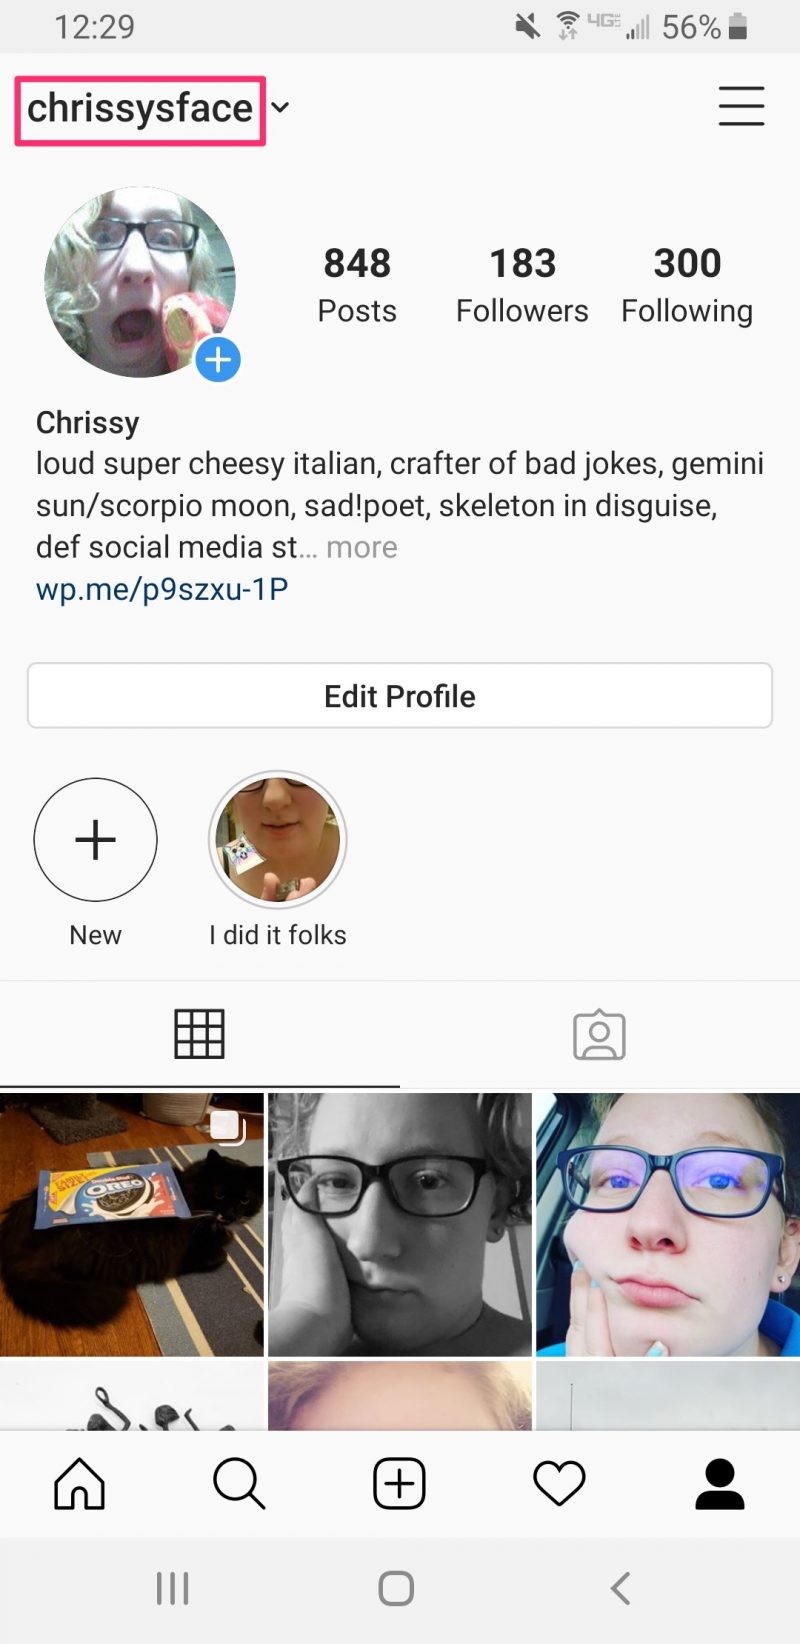 What is my Instagram URL